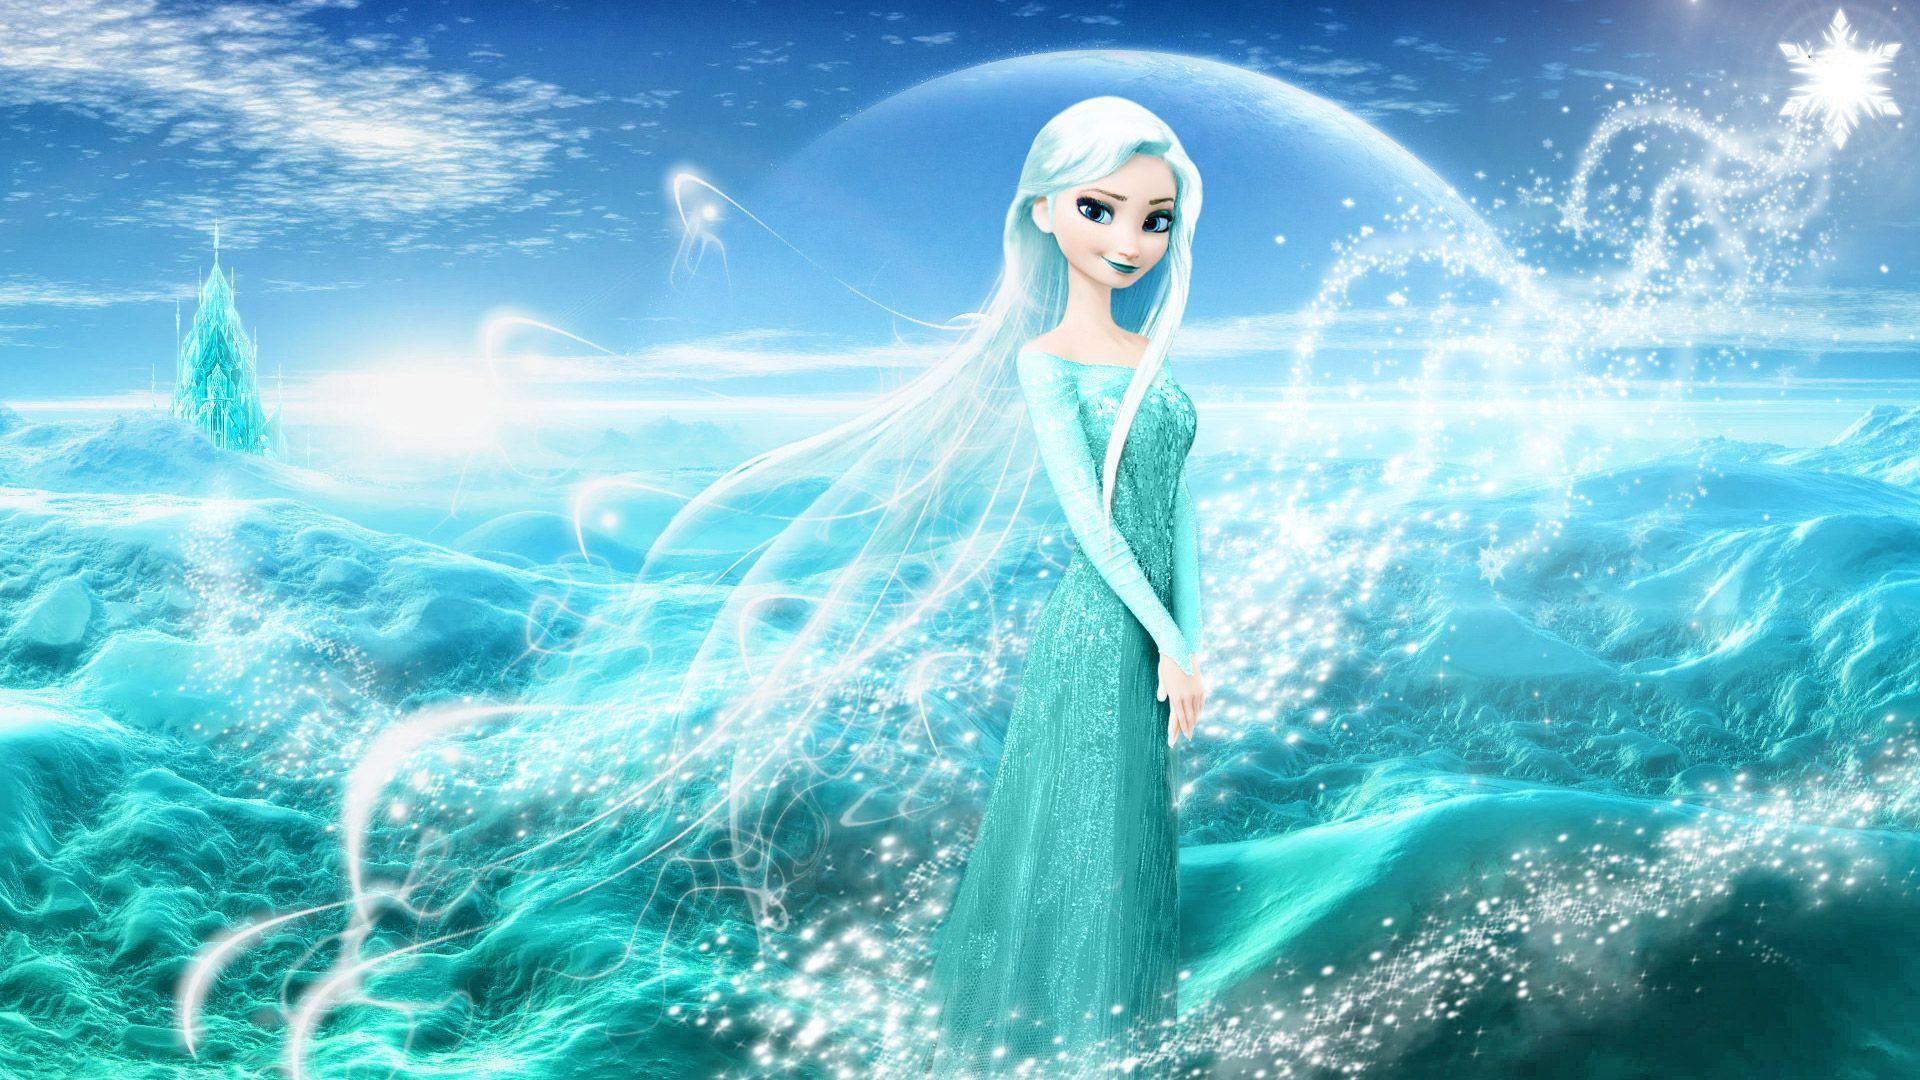 Frozen Desktop Background. Disney